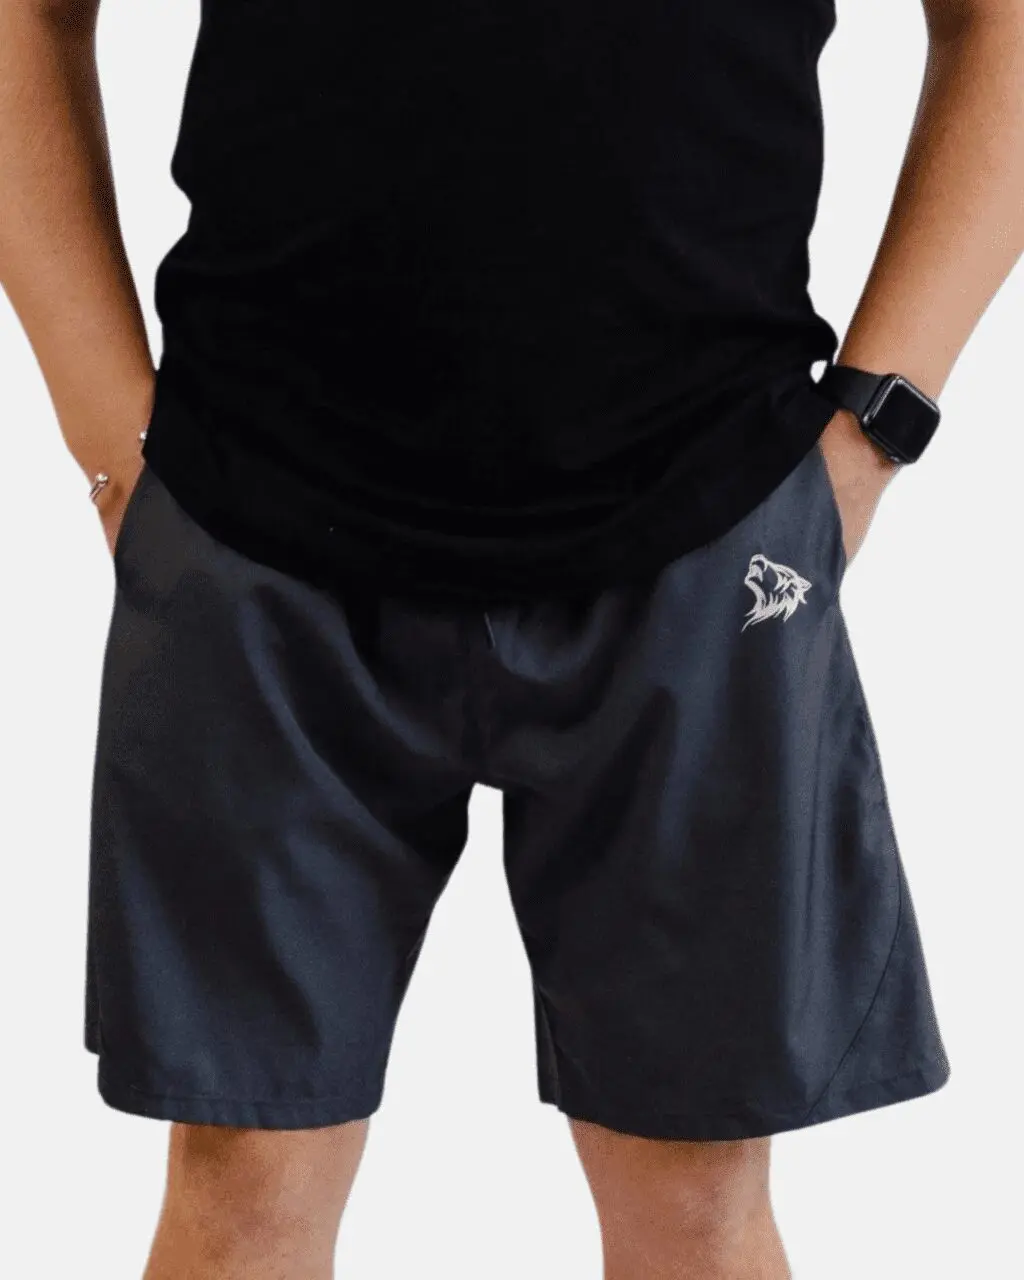 A man wearing black shorts and a black shirt.